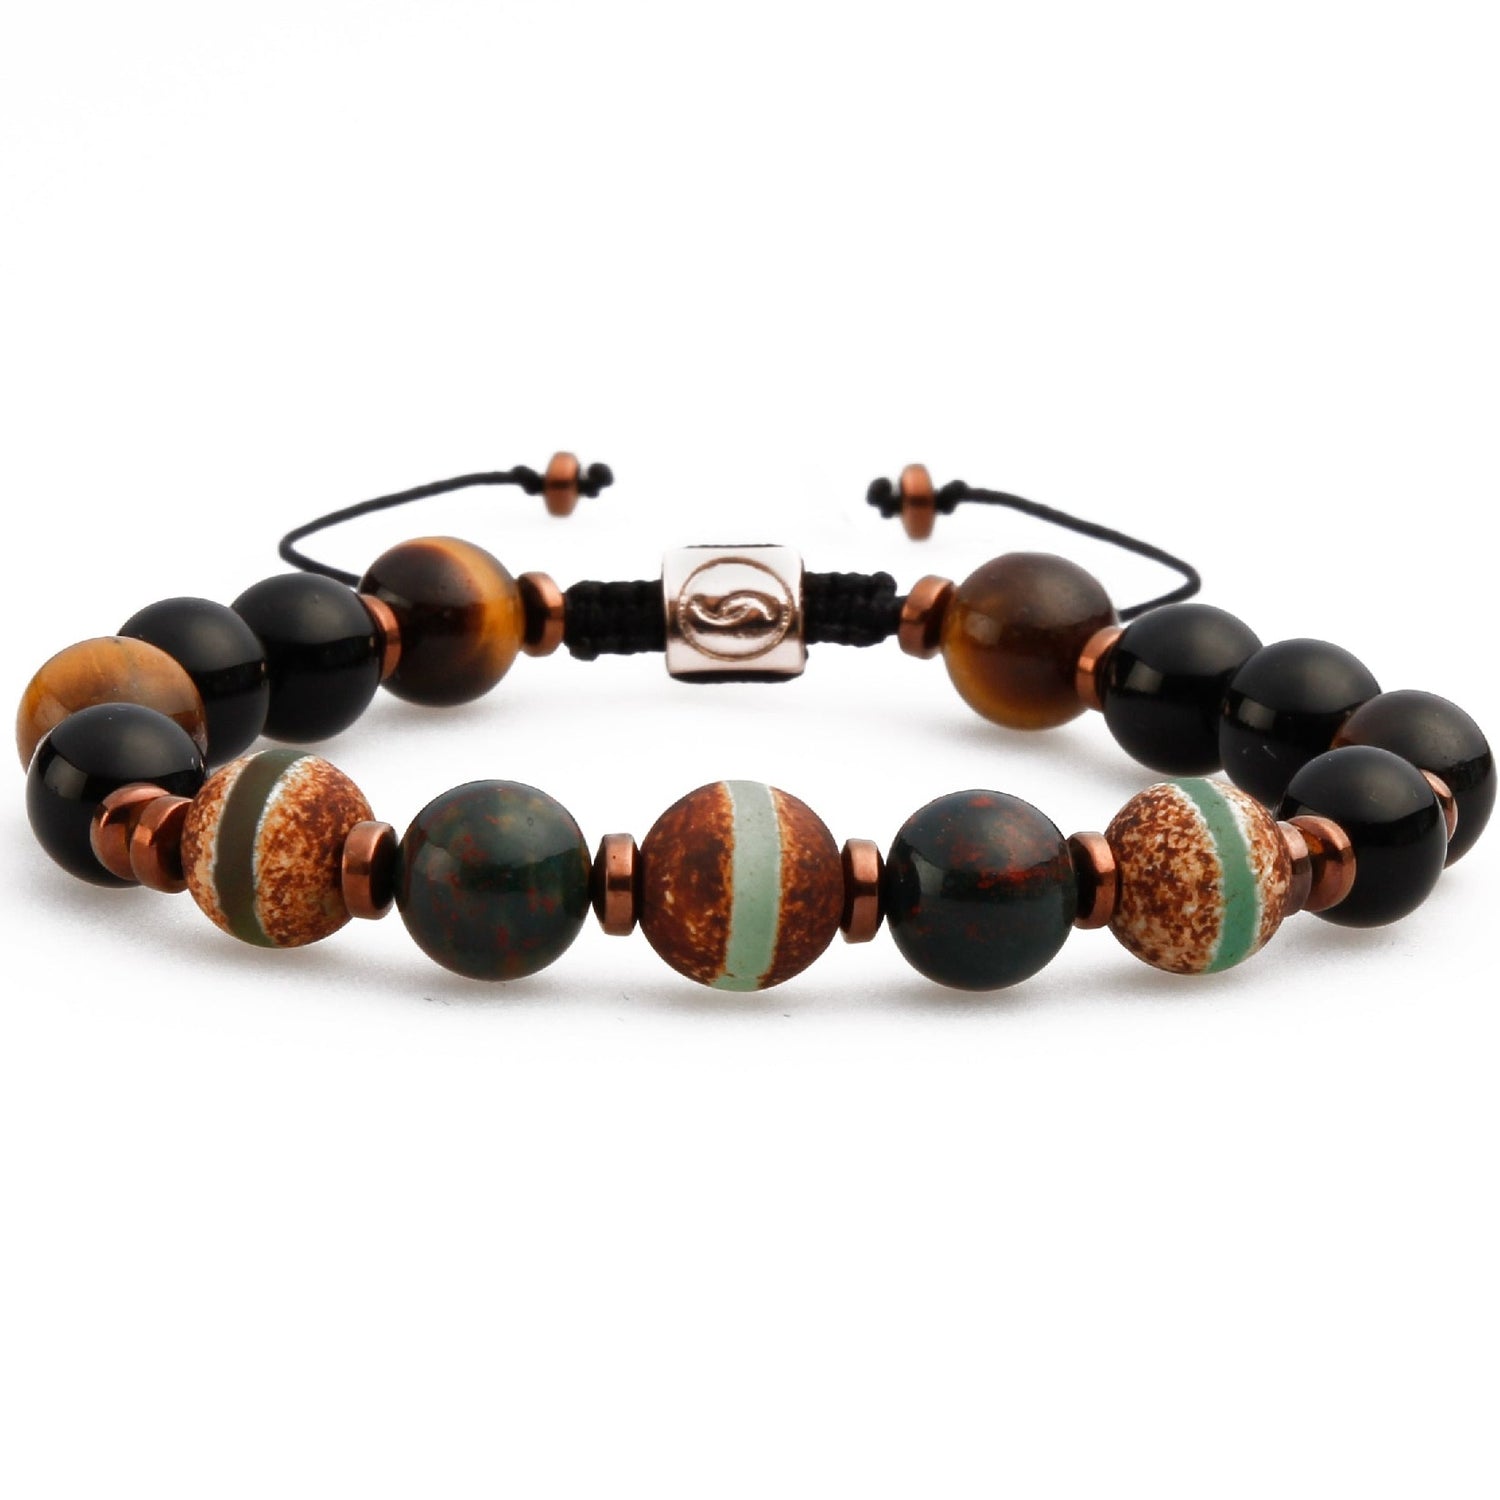 Blood Stone Tigers Eye Onyx Tibetian Agate healing natural gemstone beaded bracelet for strength 